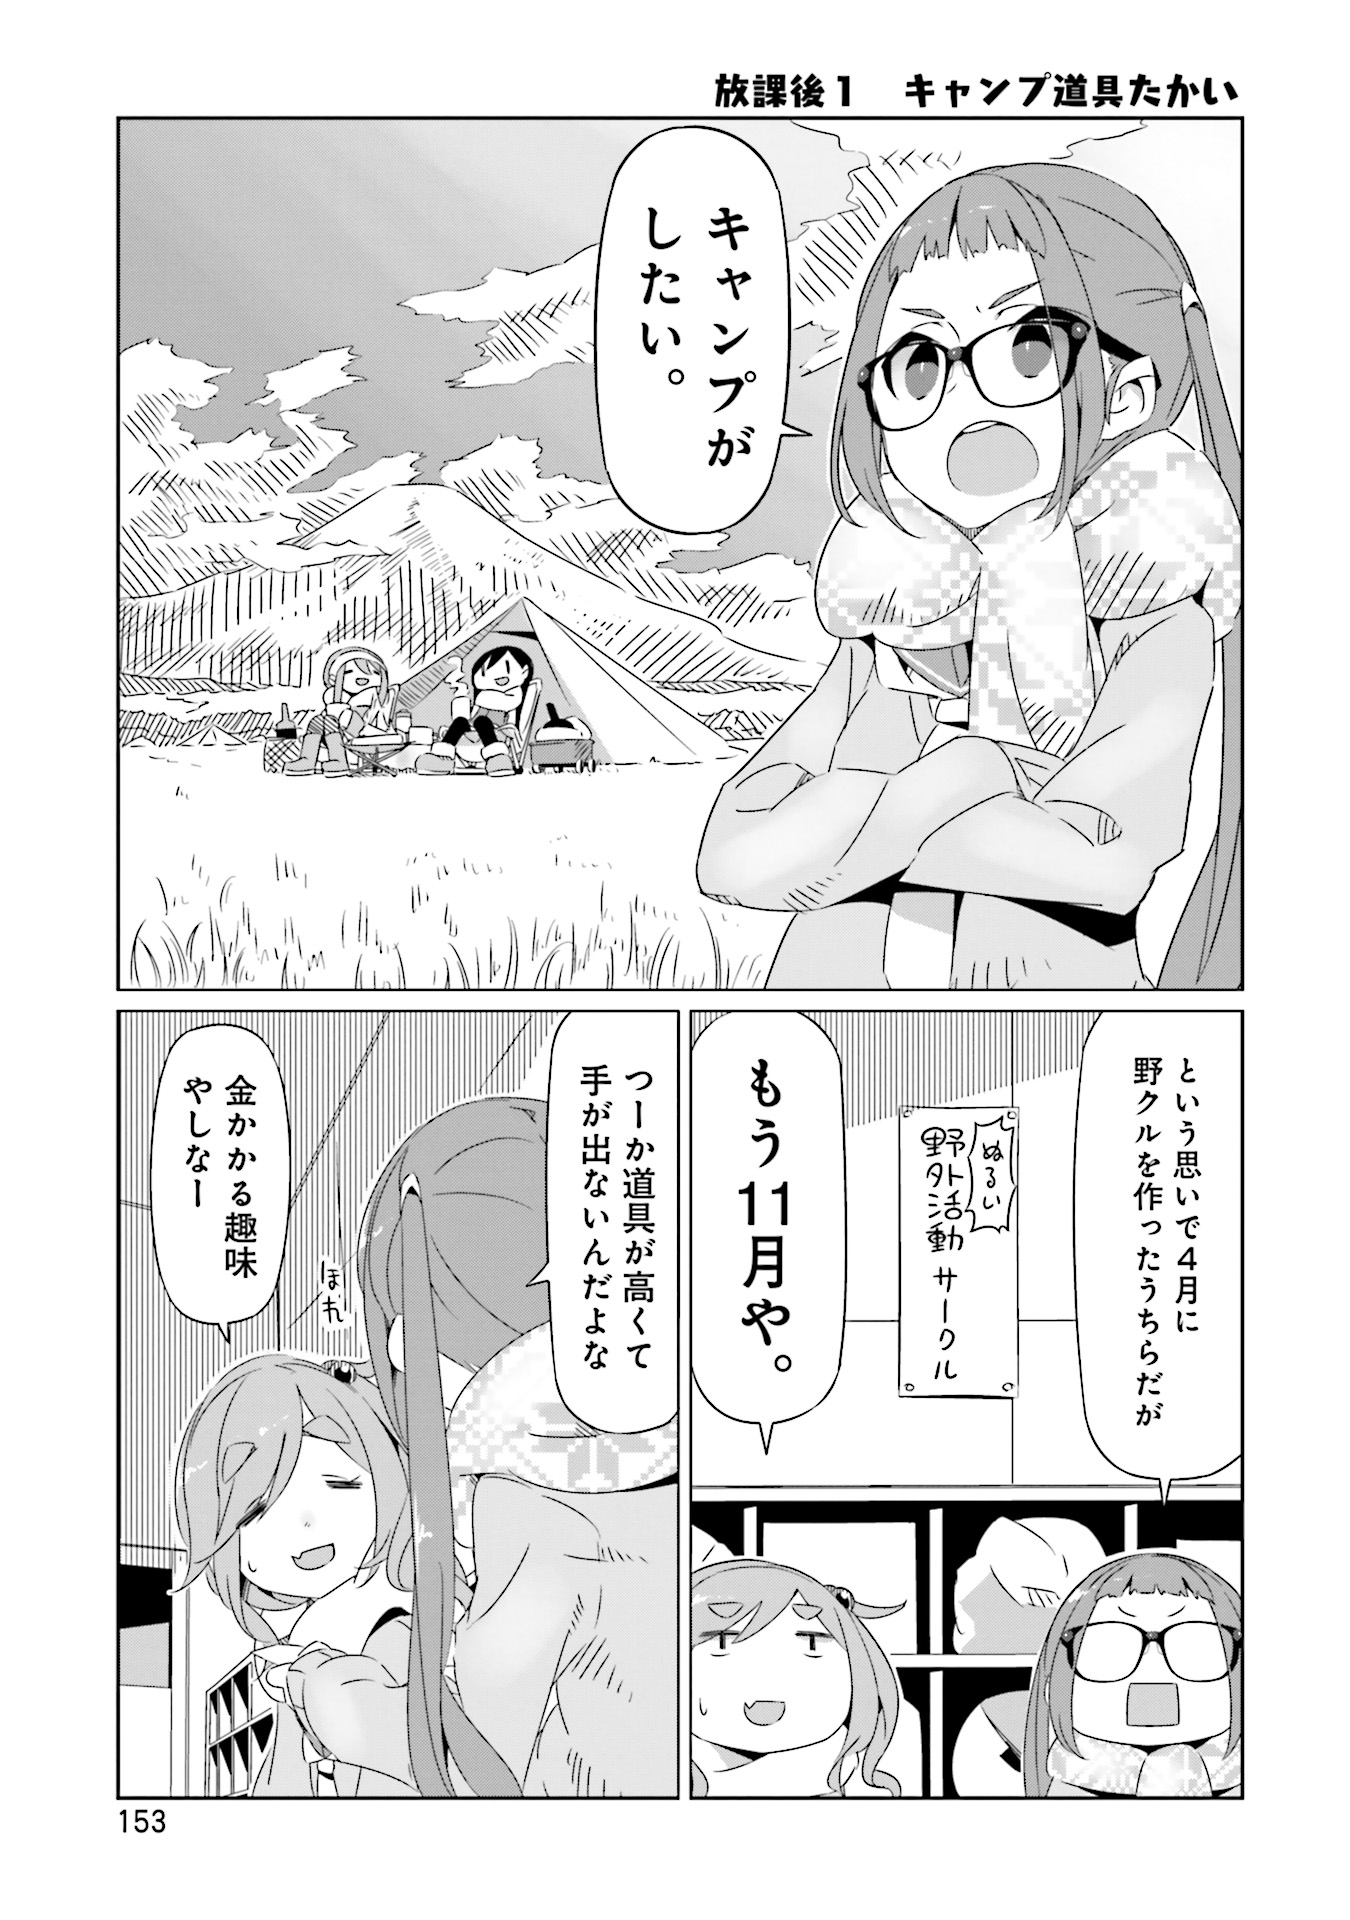 Yuru Camp - Chapter 18.5 - Page 1